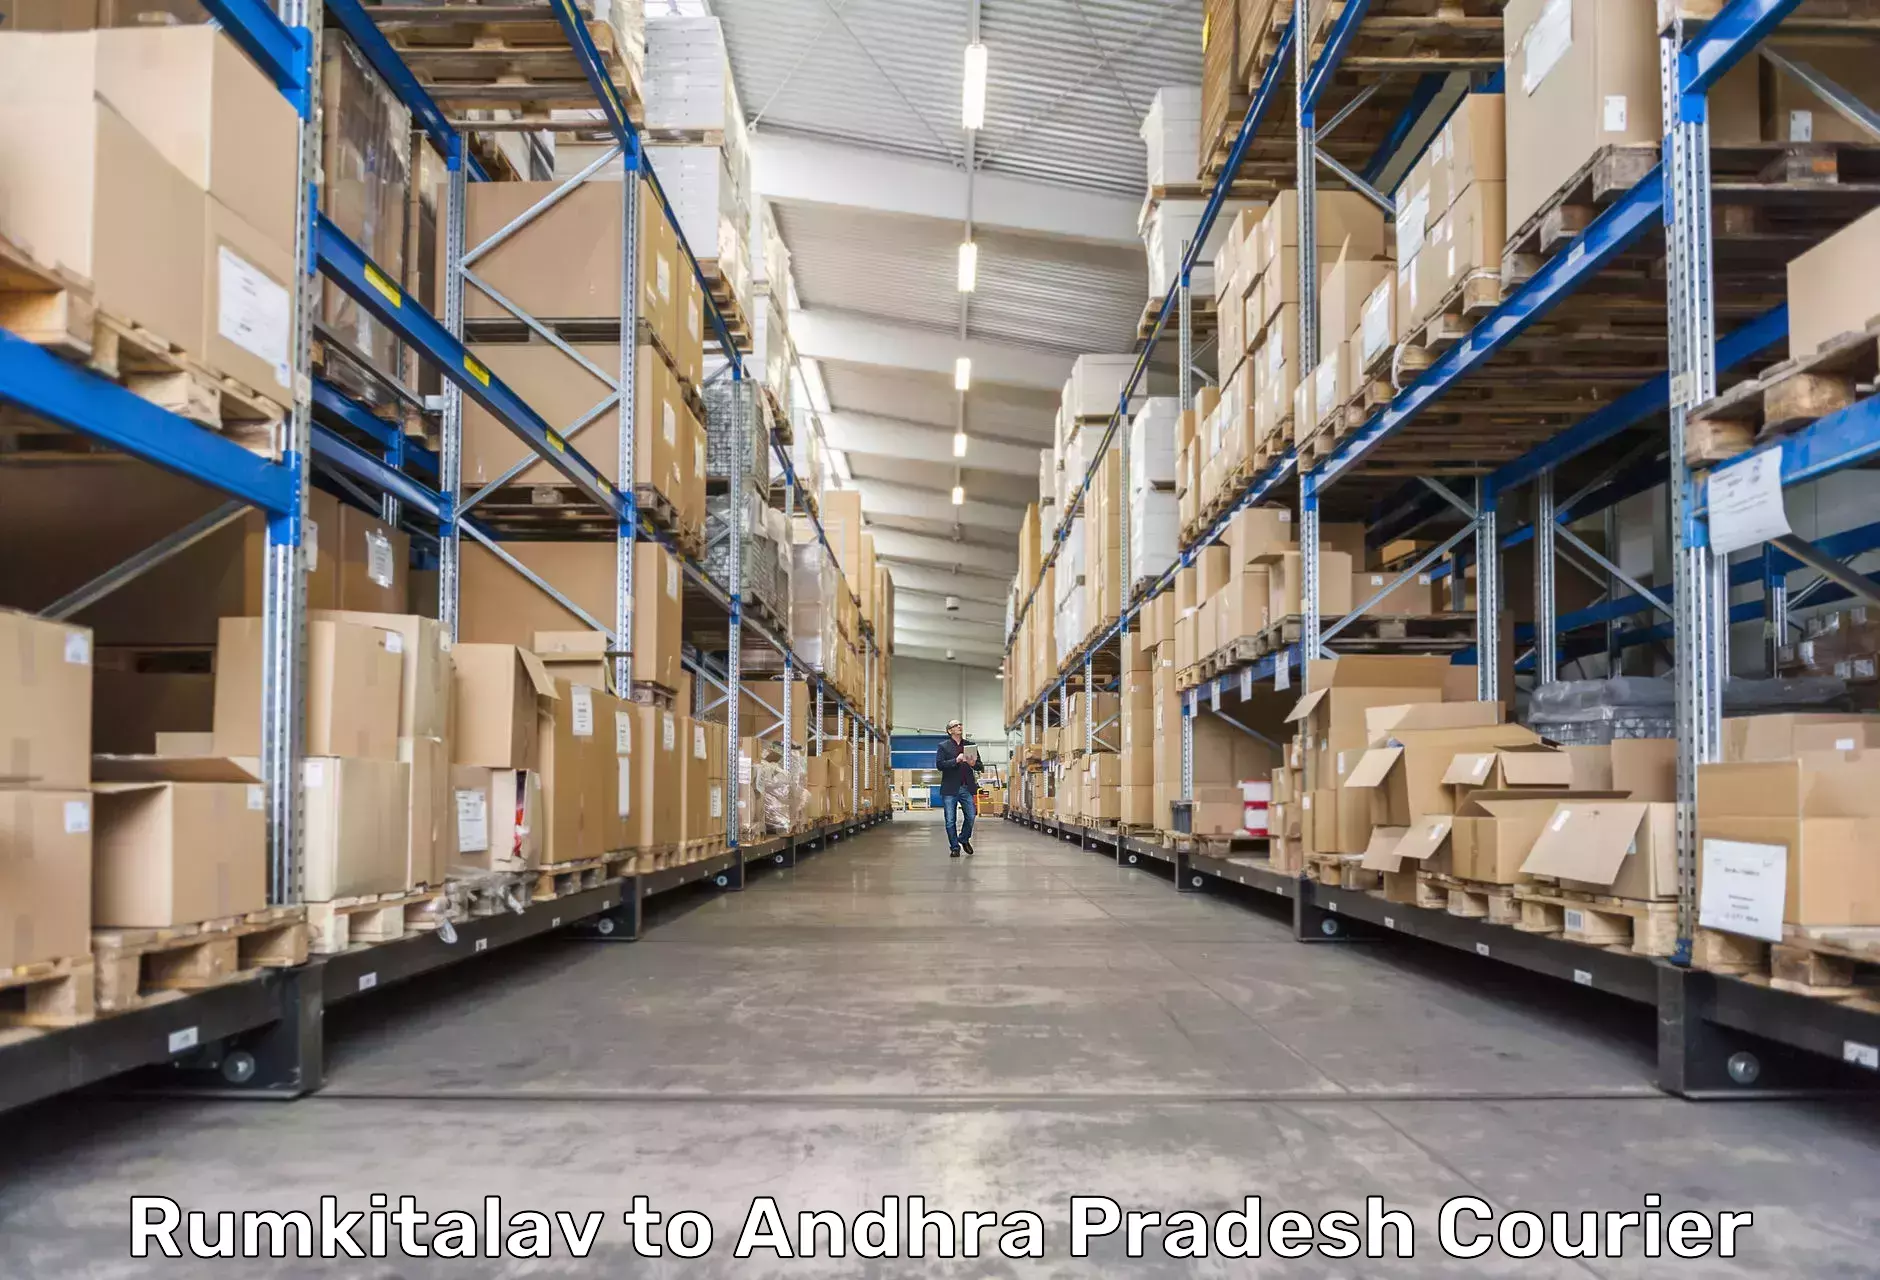 E-commerce shipping partnerships Rumkitalav to Andhra Pradesh